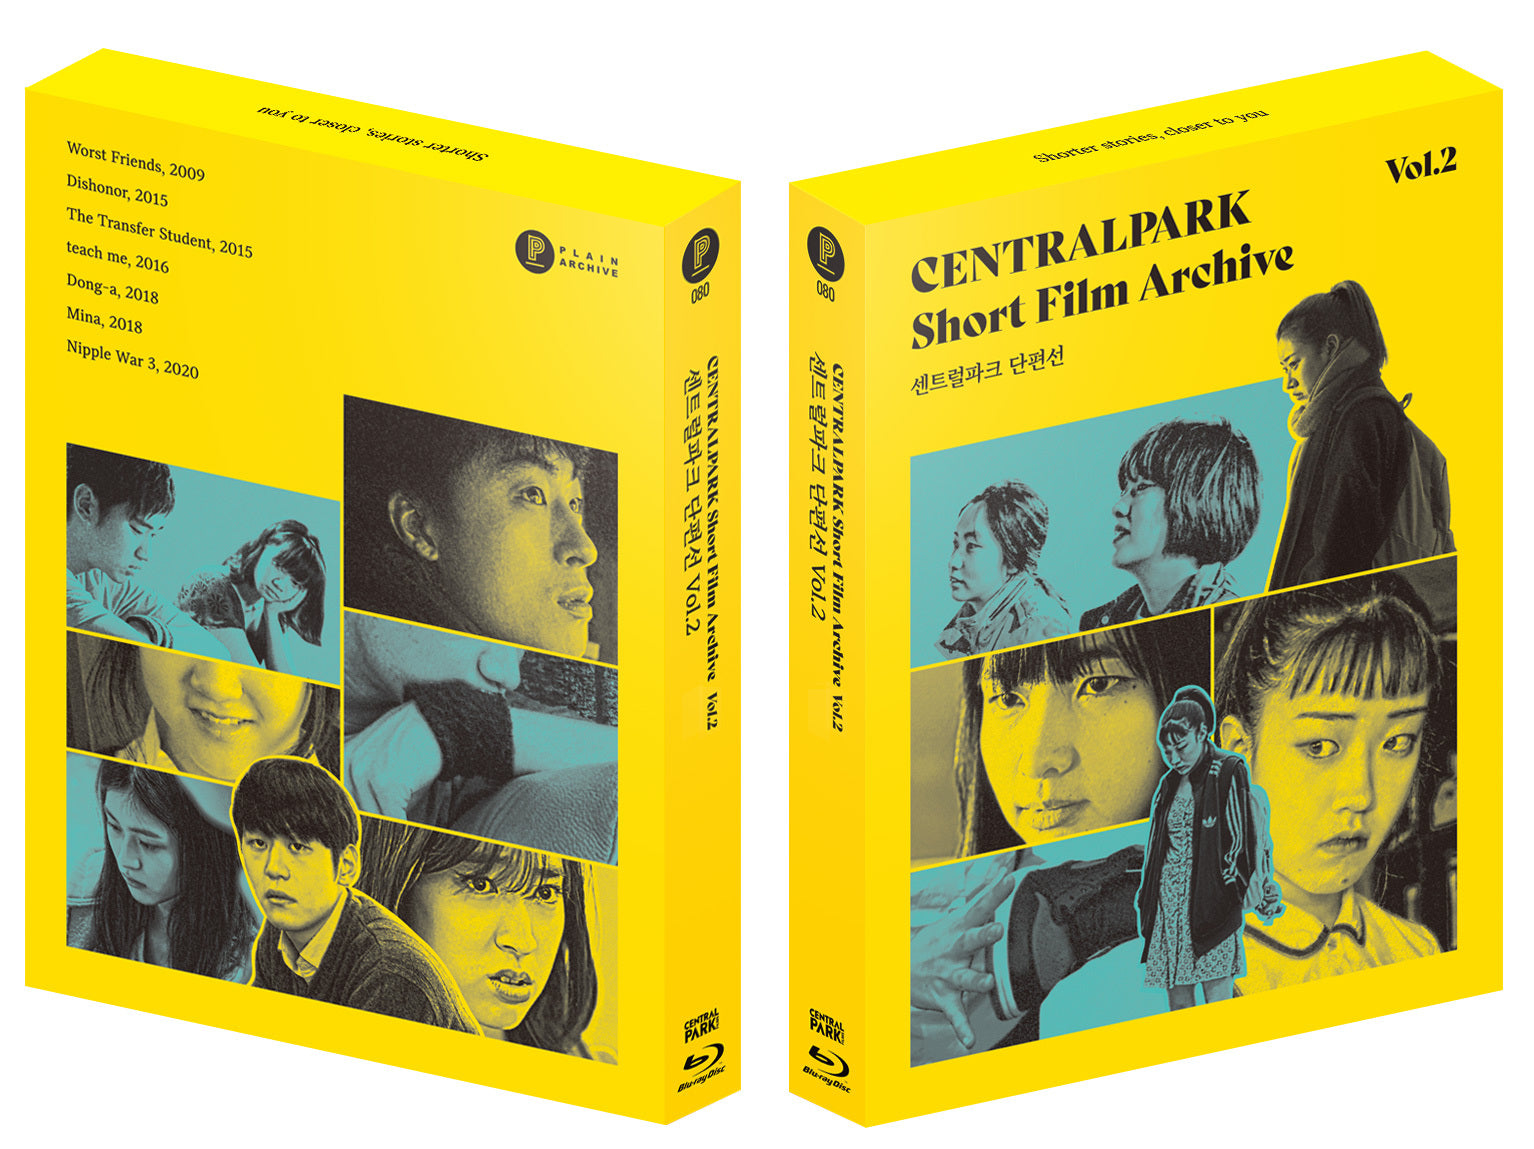 CENTRALPARK Short Film Archive Vol.2: Limited Edition